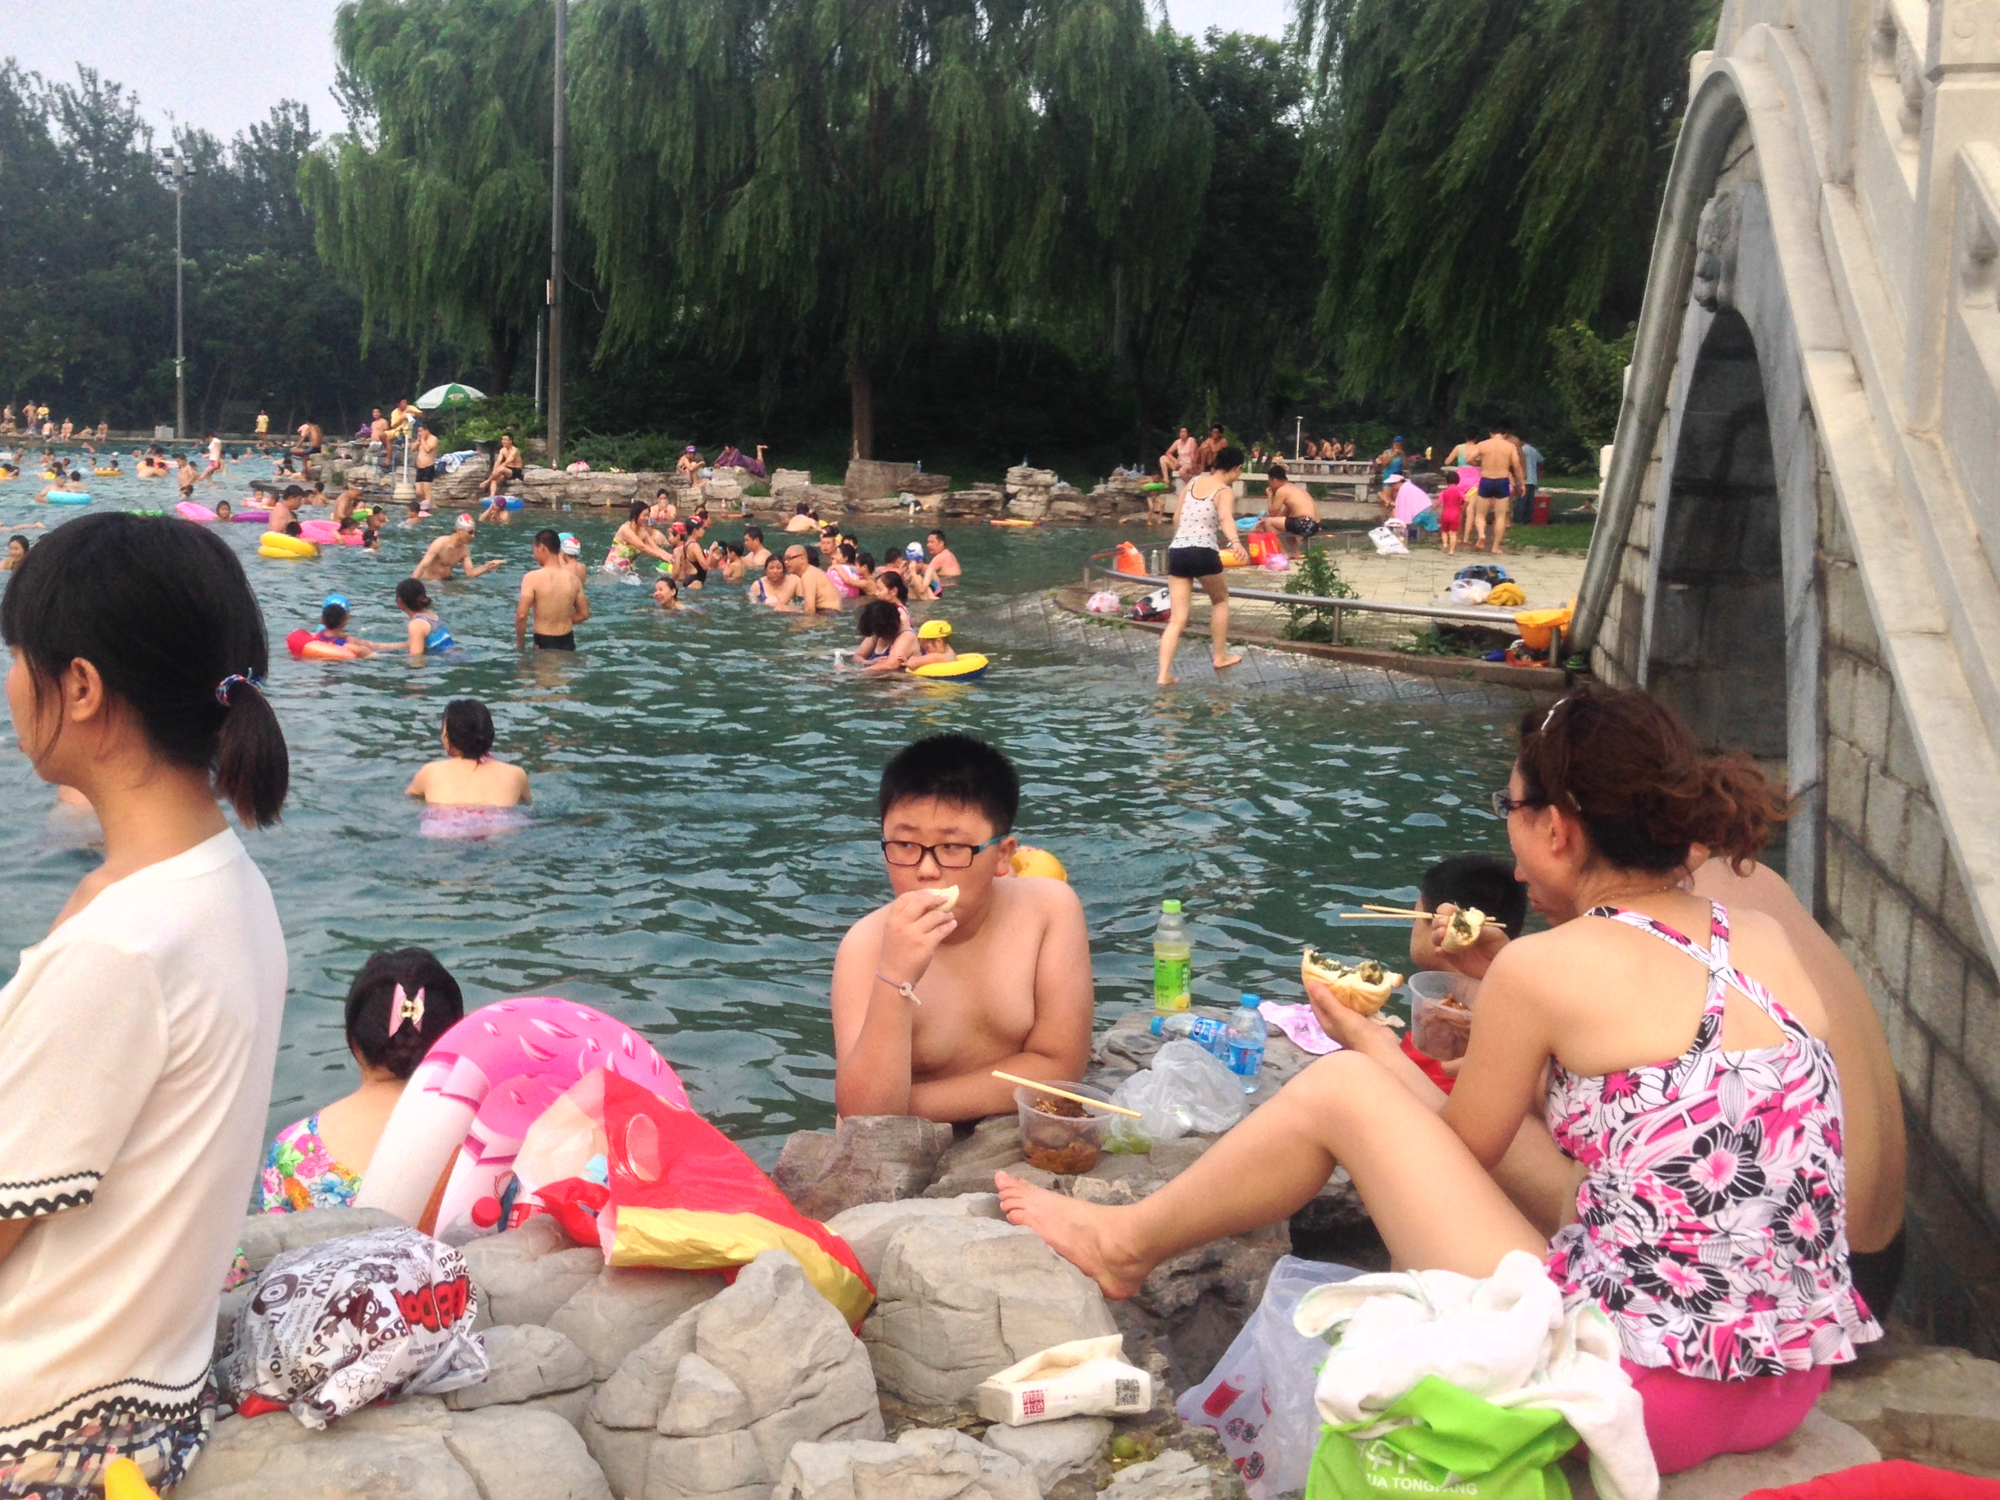 Liulang Natatorium, Beijing, July 20, 2014.